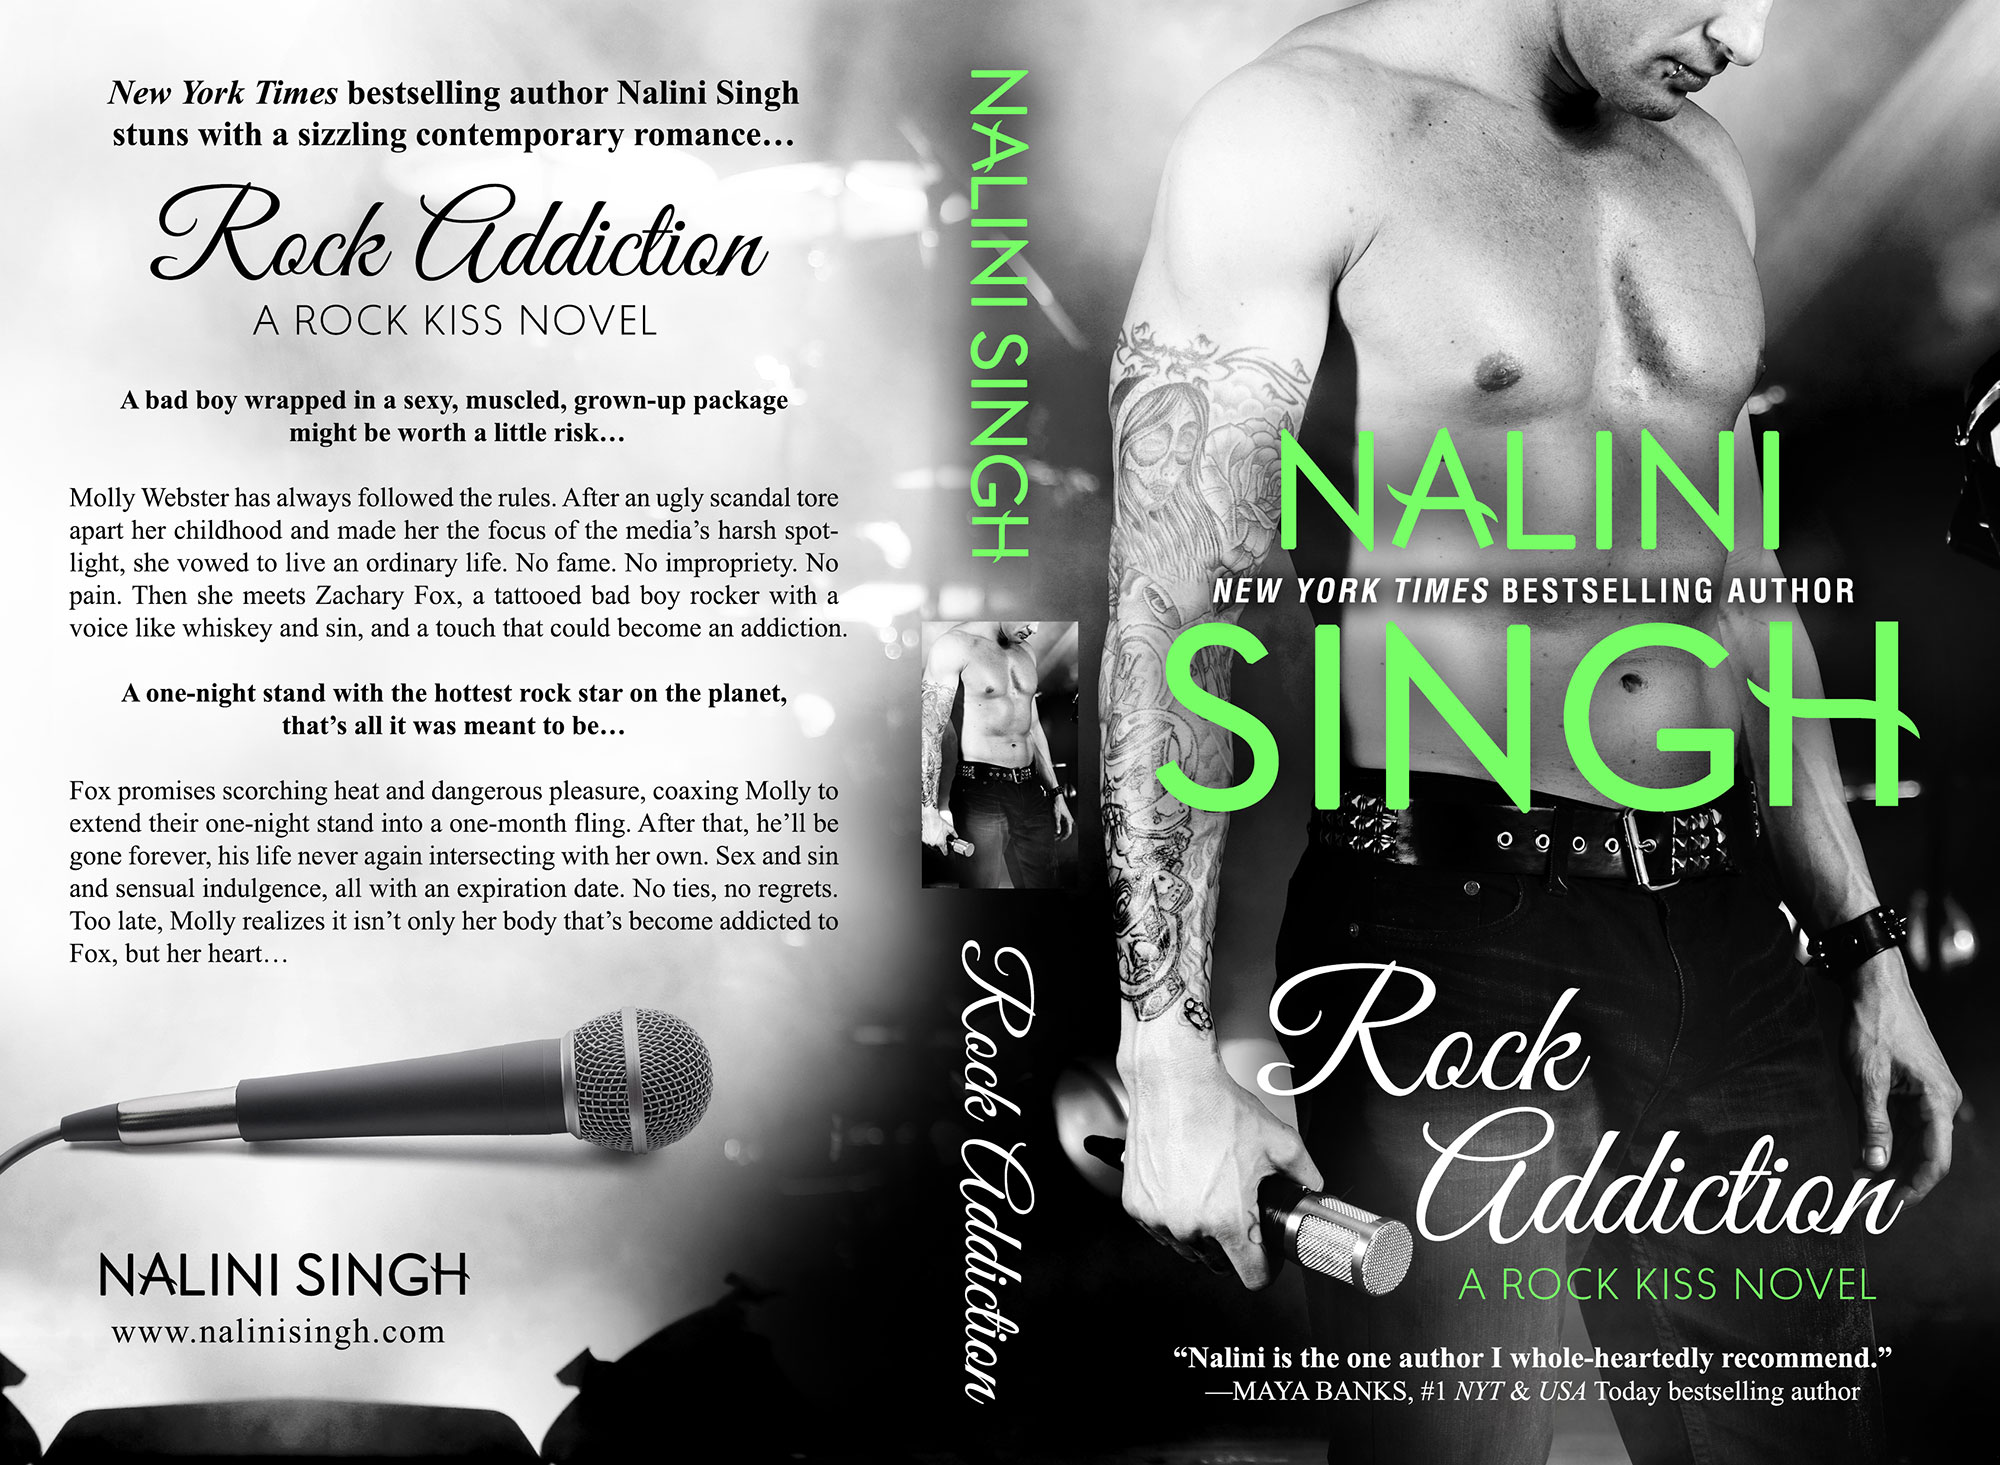 Rock Addiction by Nalini Singh (Print Coverflat)